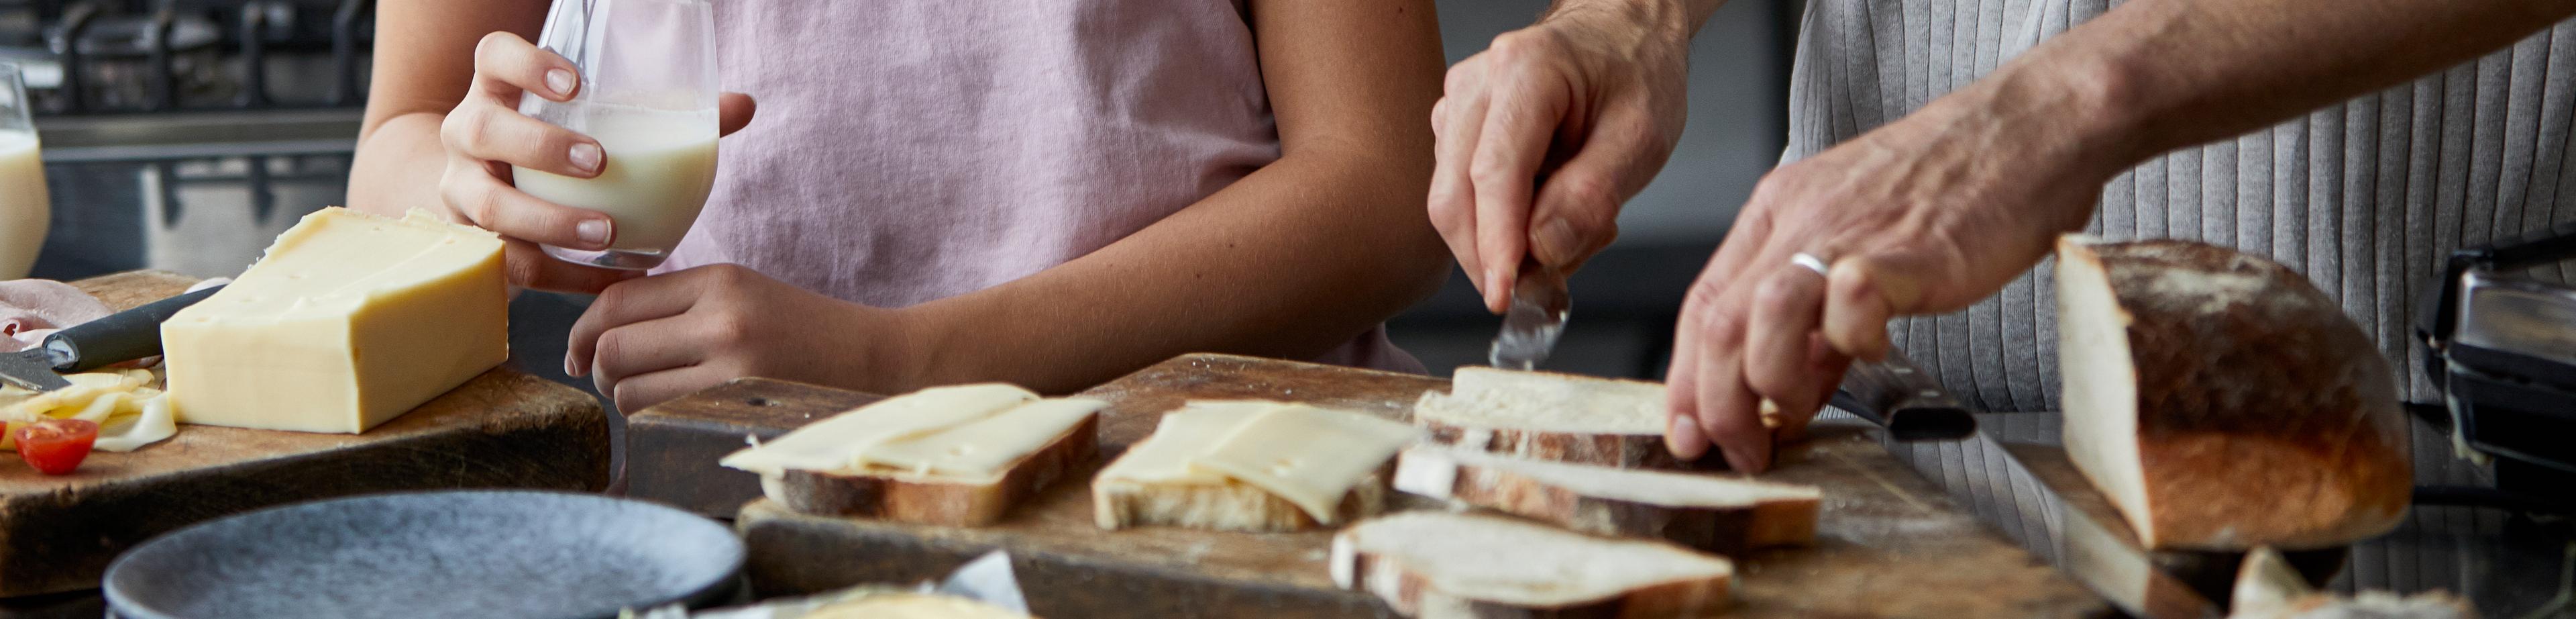 Jente lager toast med ost sammen med faren sin